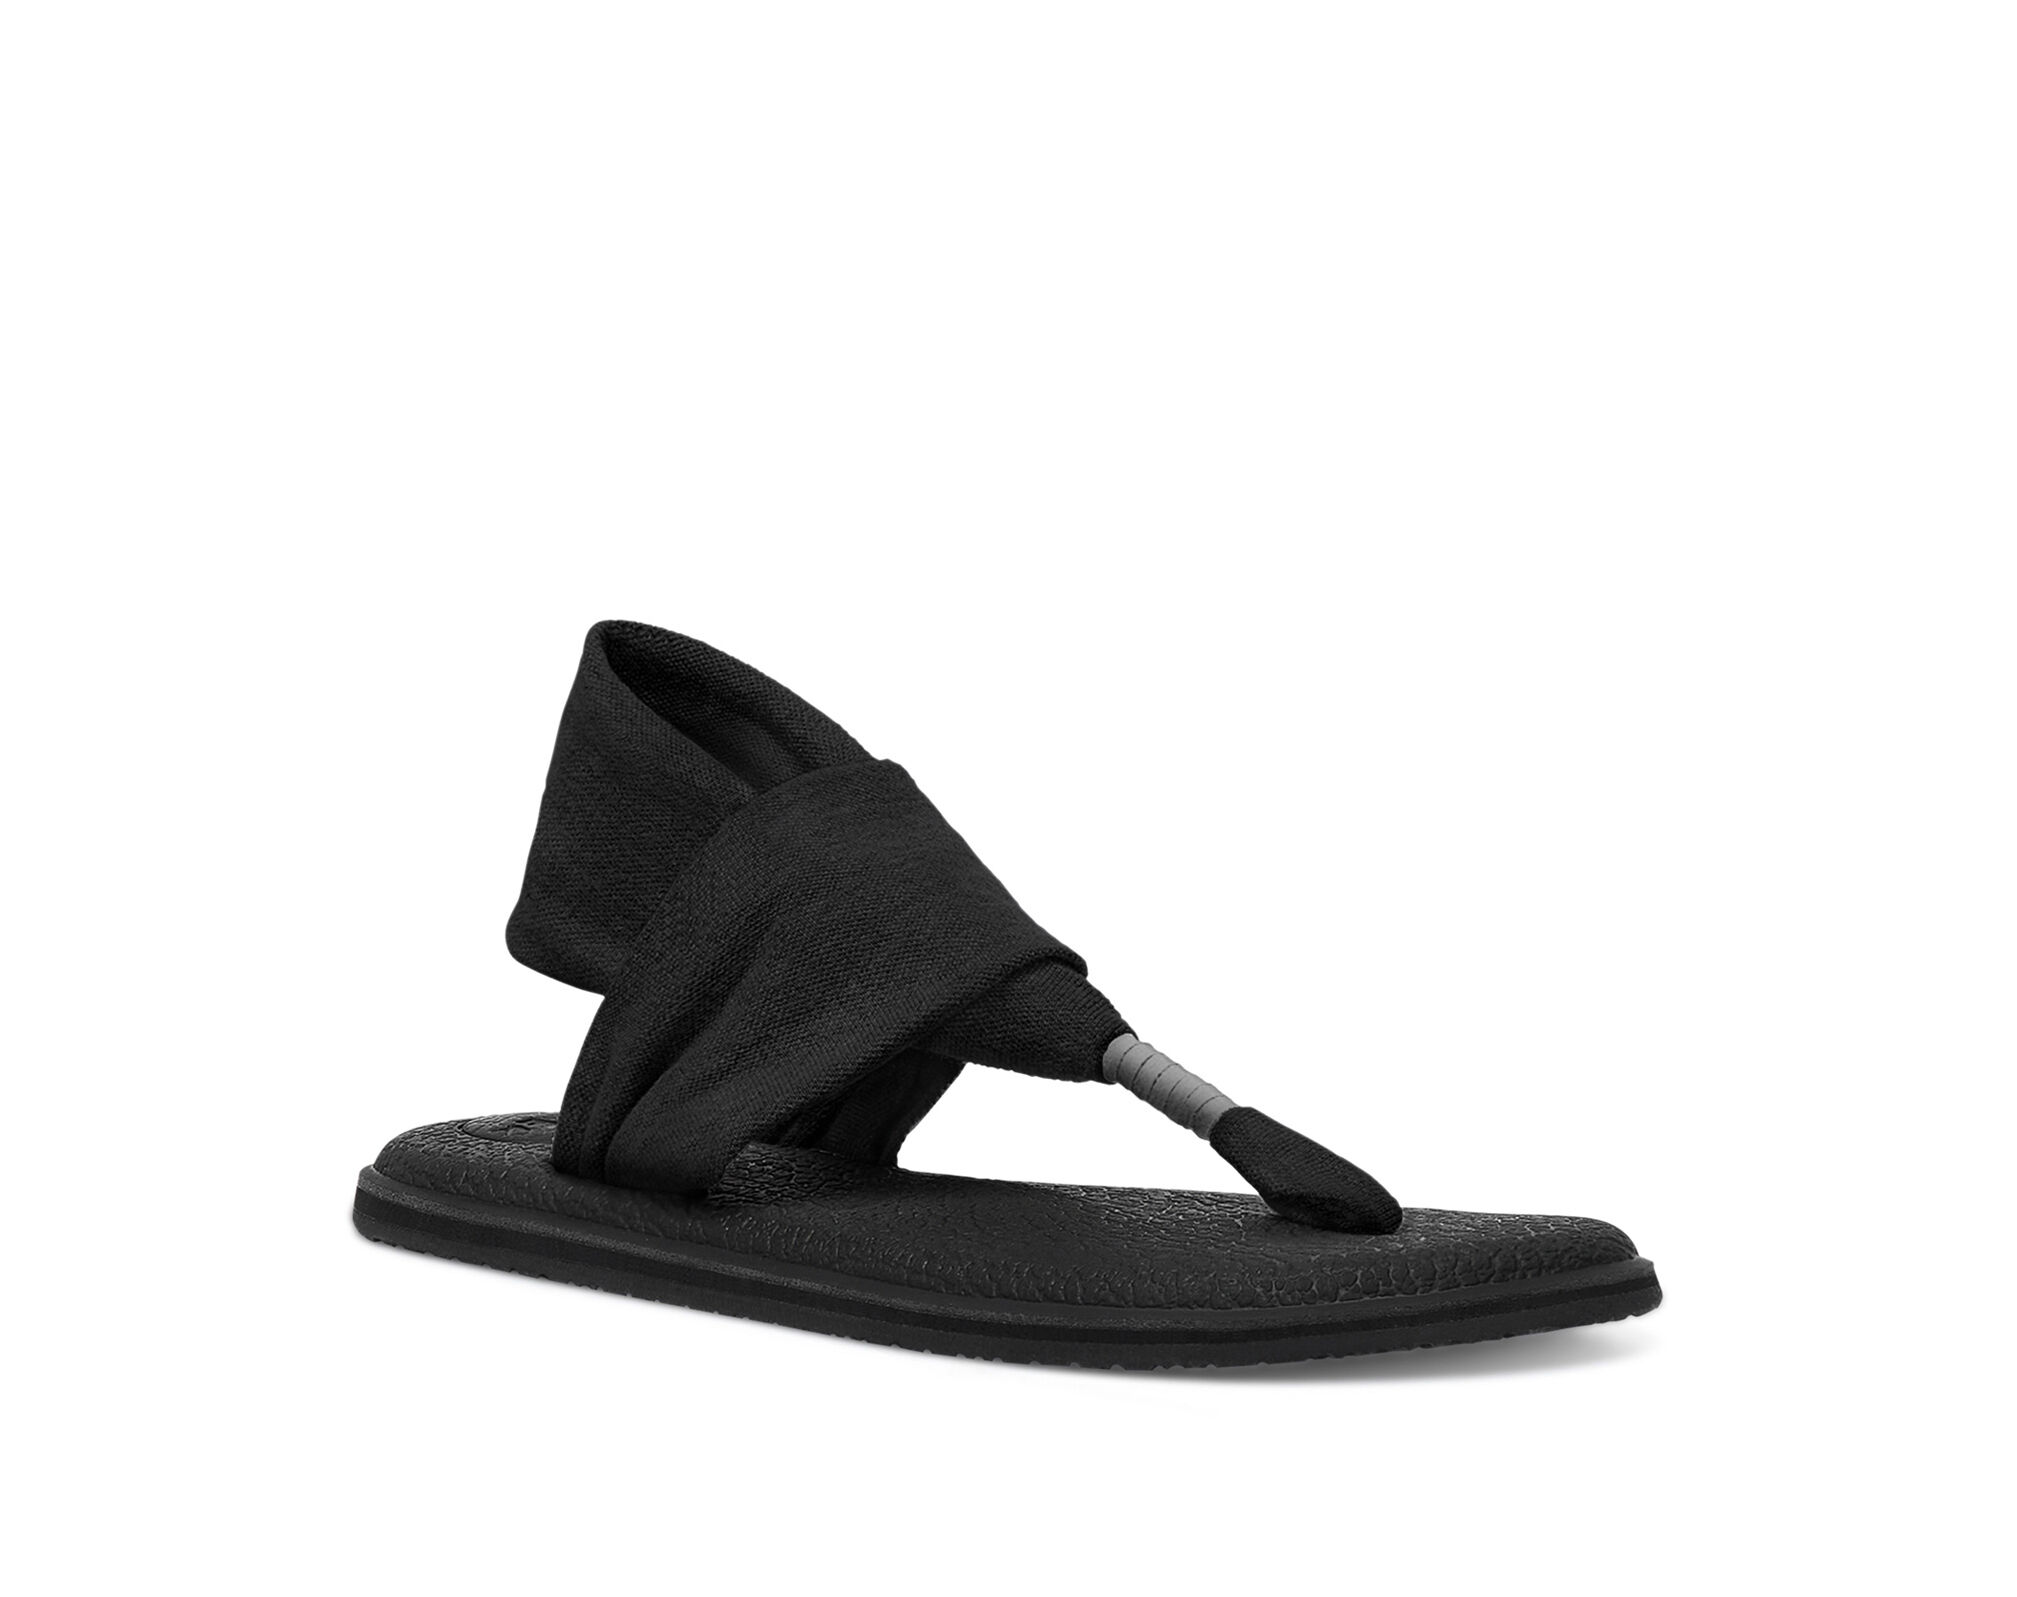 Sanuk Yoga Slinged Up Prints Sandals Flip Flops Shoes Melon Tile Sz 7 NWT 